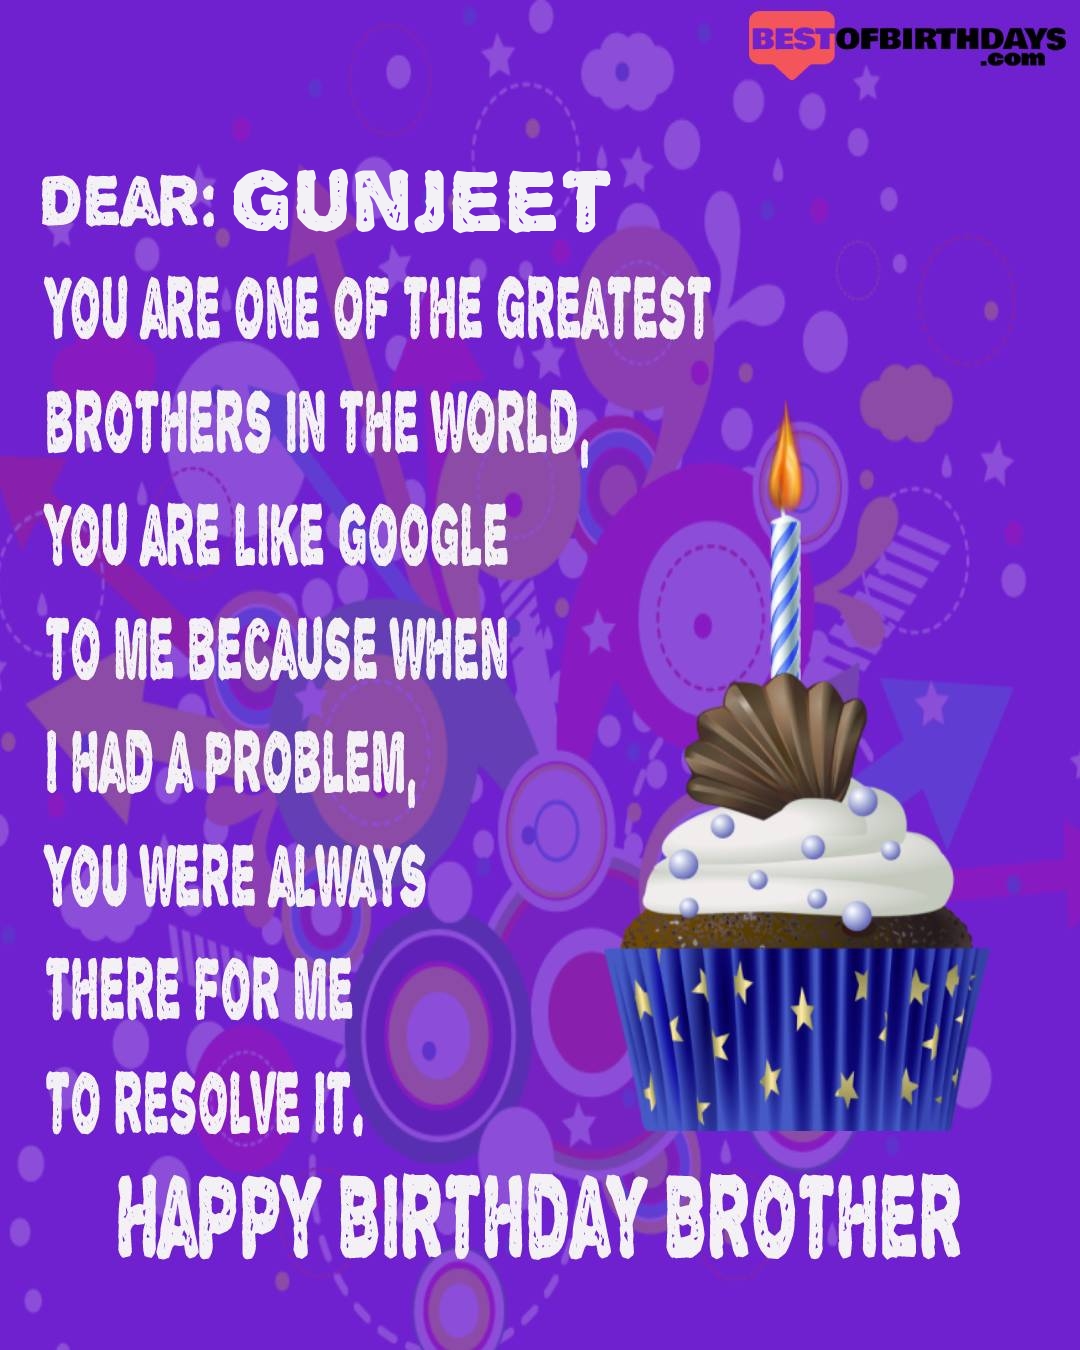 Happy birthday gunjeet bhai brother bro